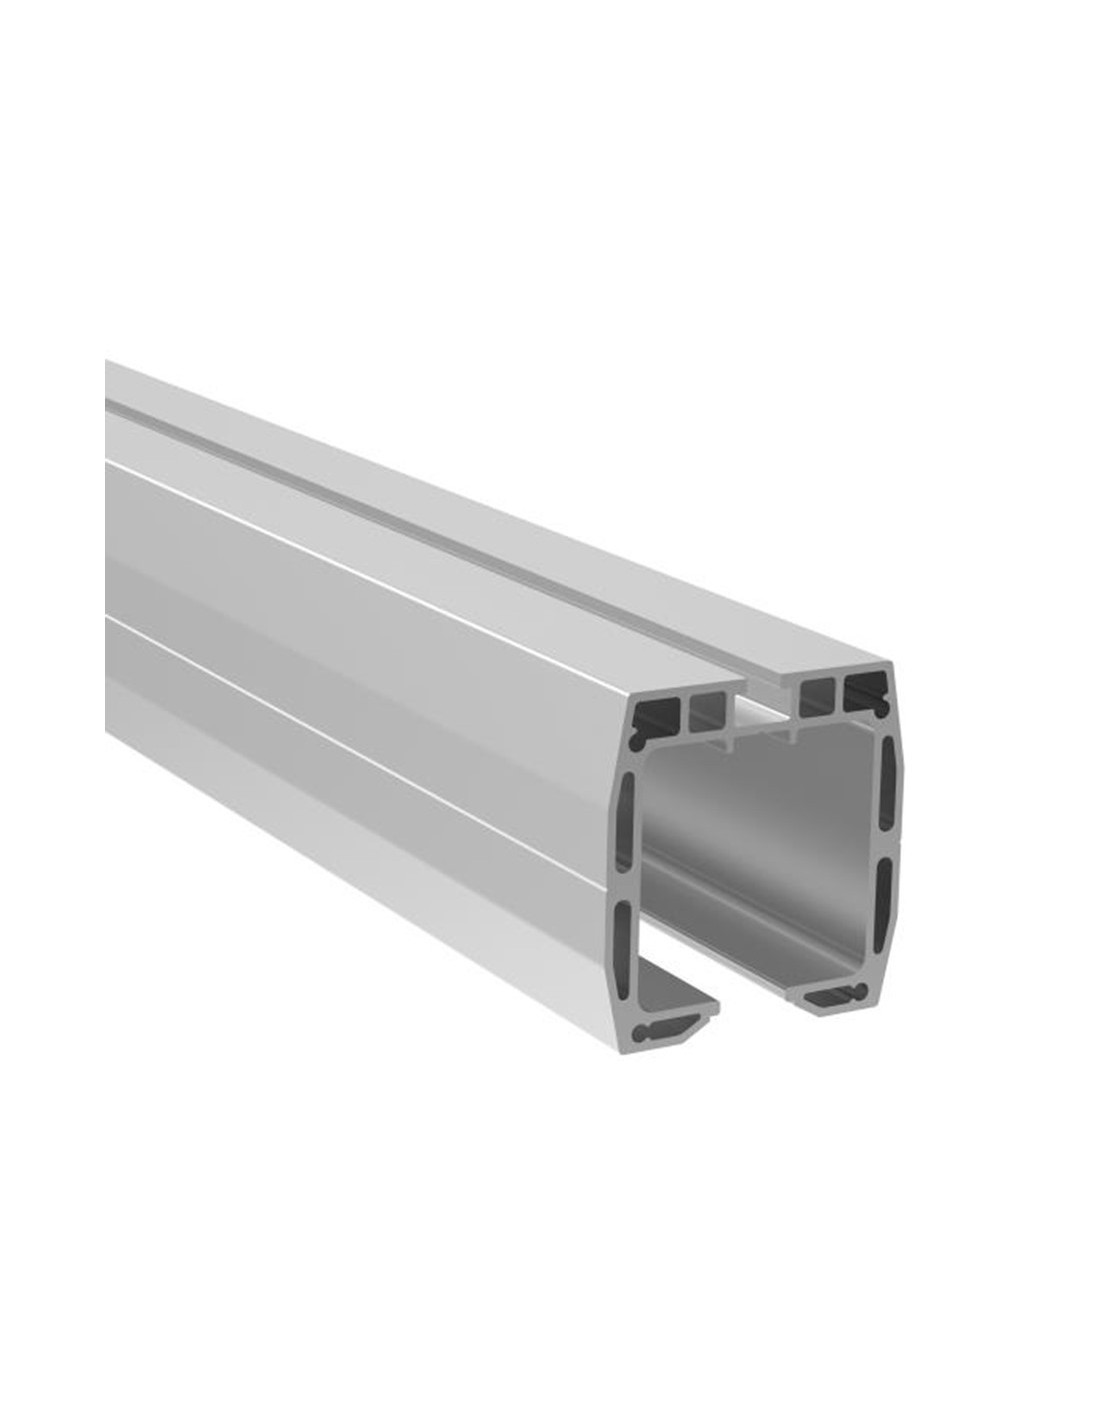 https://steelproduct.at/3754-thickbox_default/laufschiene-aluminium-90x95mm.jpg